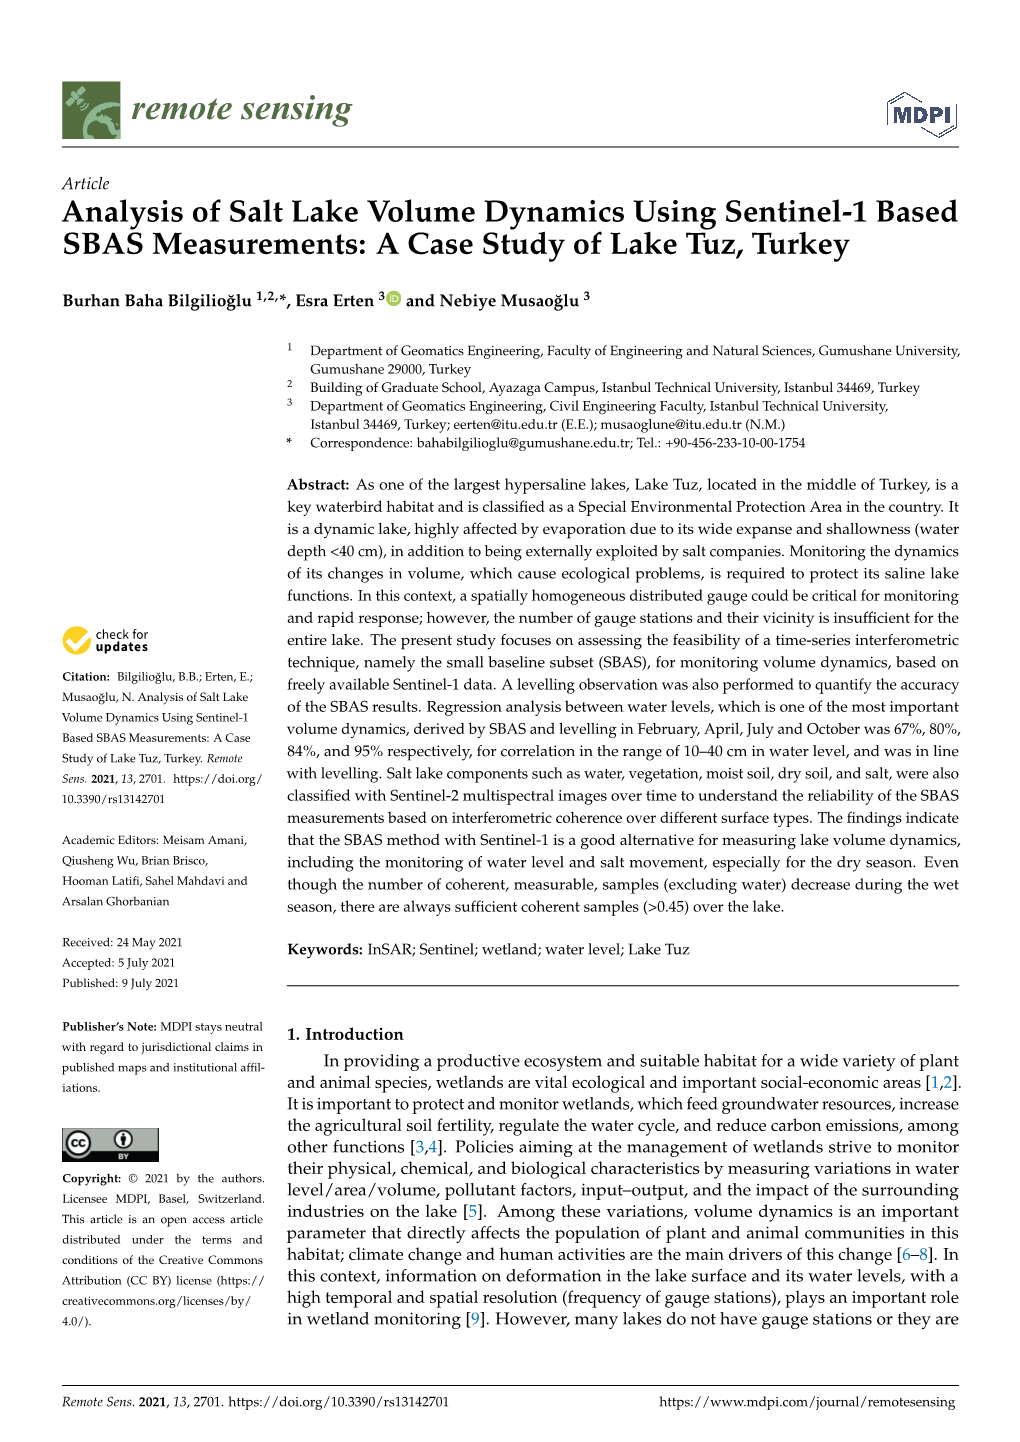 Analysis of Salt Lake Volume Dynamics Using Sentinel-1 Based SBAS Measurements: a Case Study of Lake Tuz, Turkey